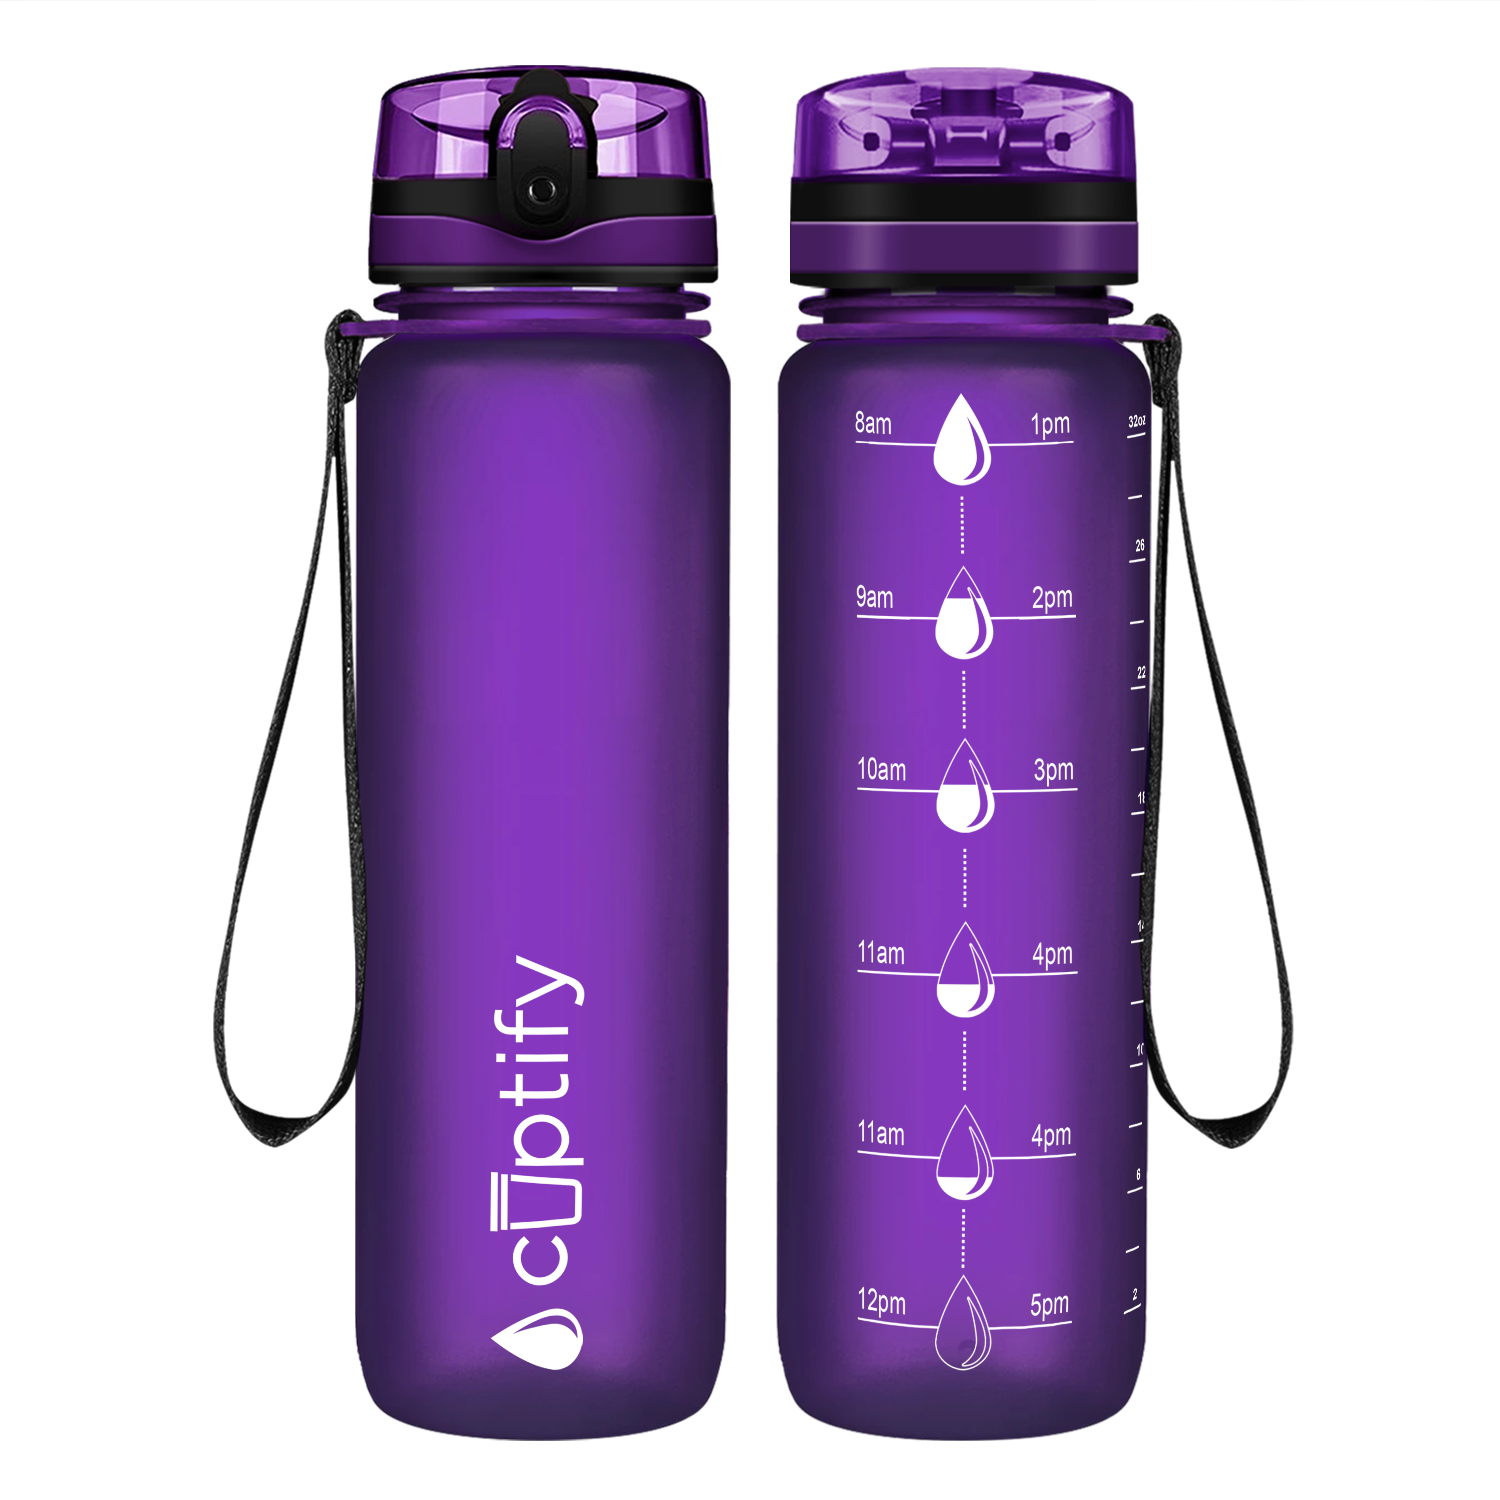 Cuptify Purple Frosted Hydration Tracker Water Bottle